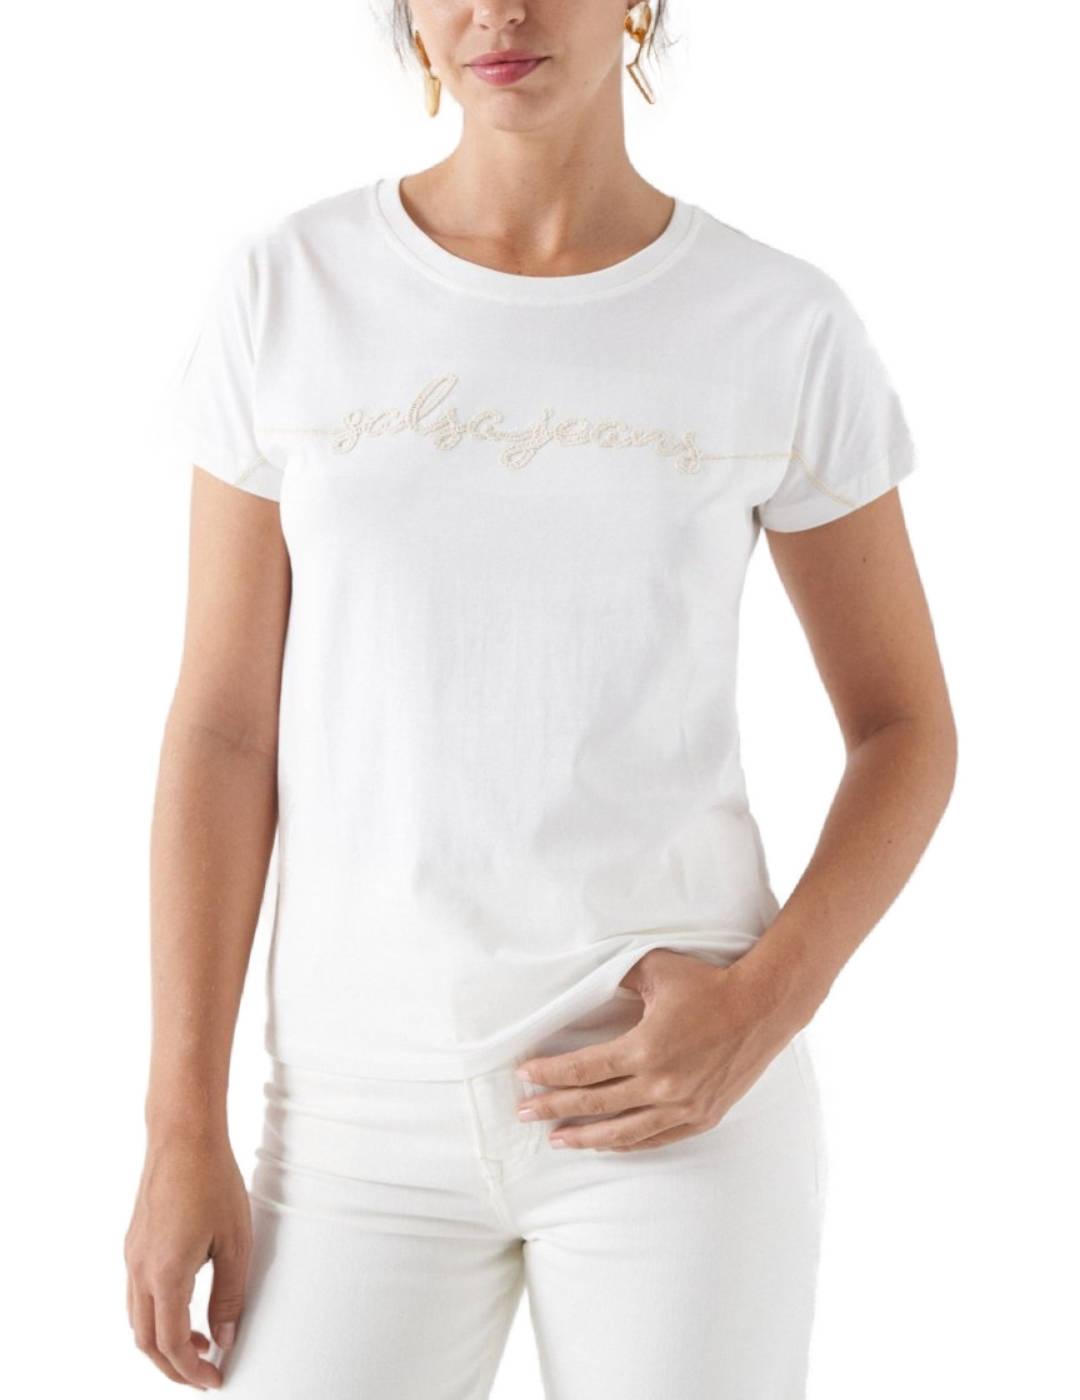 Camiseta Salsa blanca logo trenzado manga corta de mujer